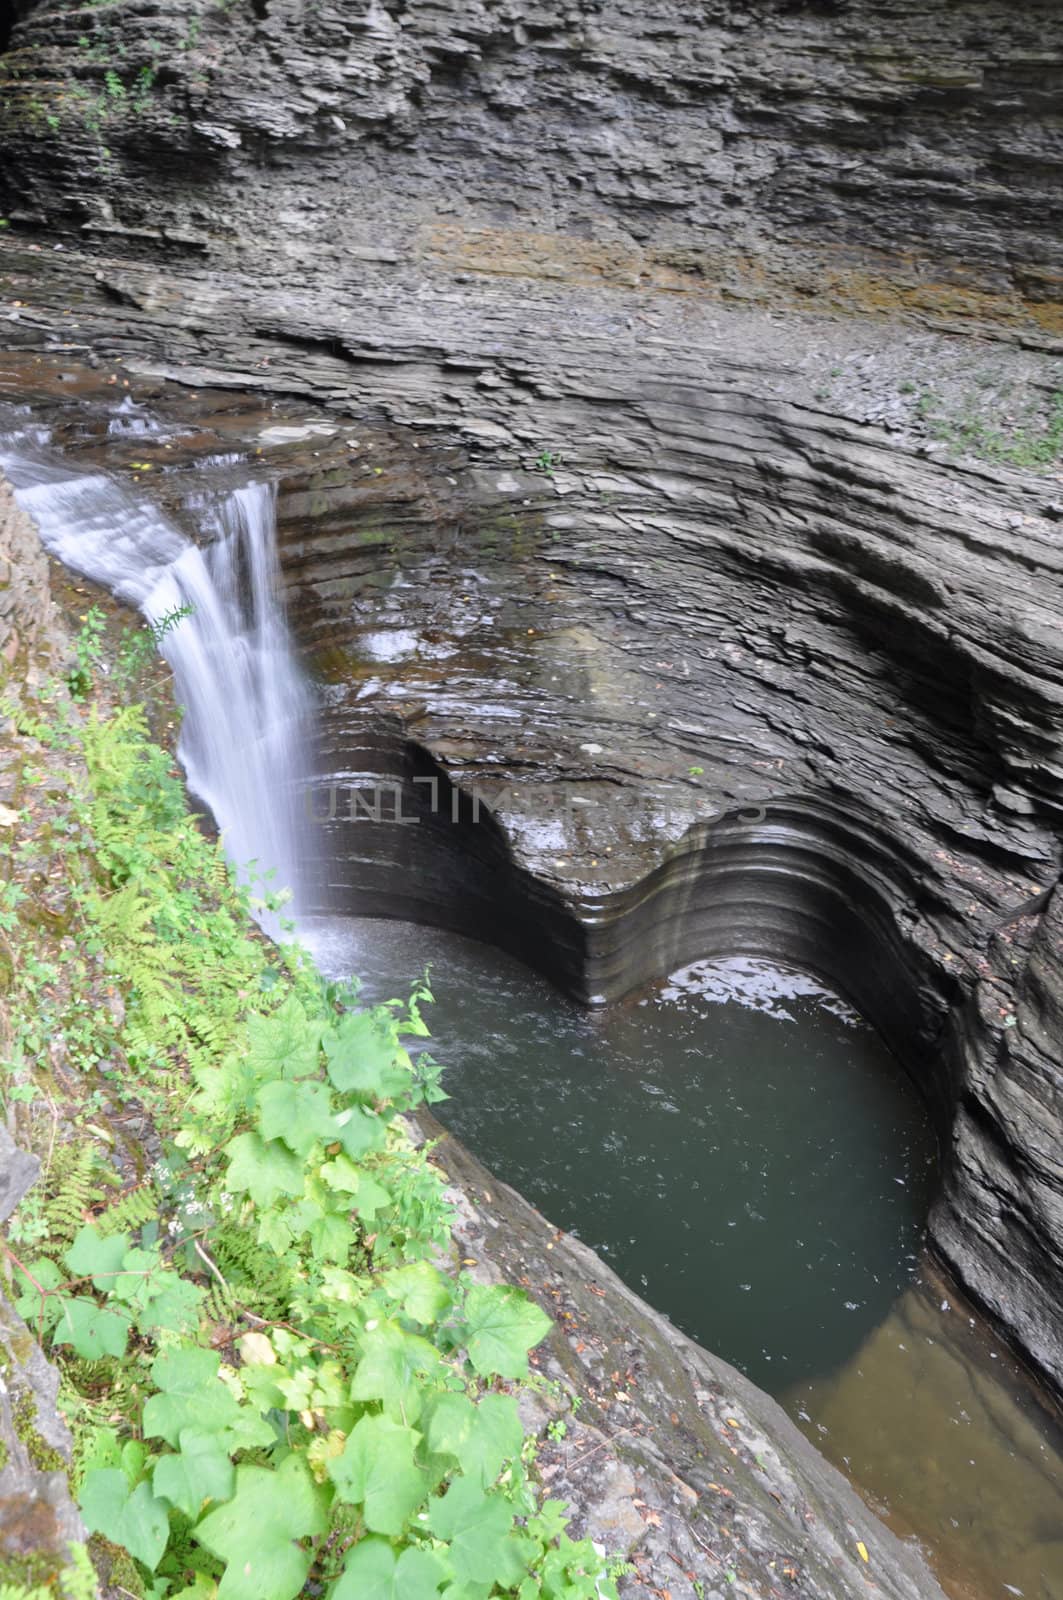 Heart-shaped waterfall pool in upstate New York